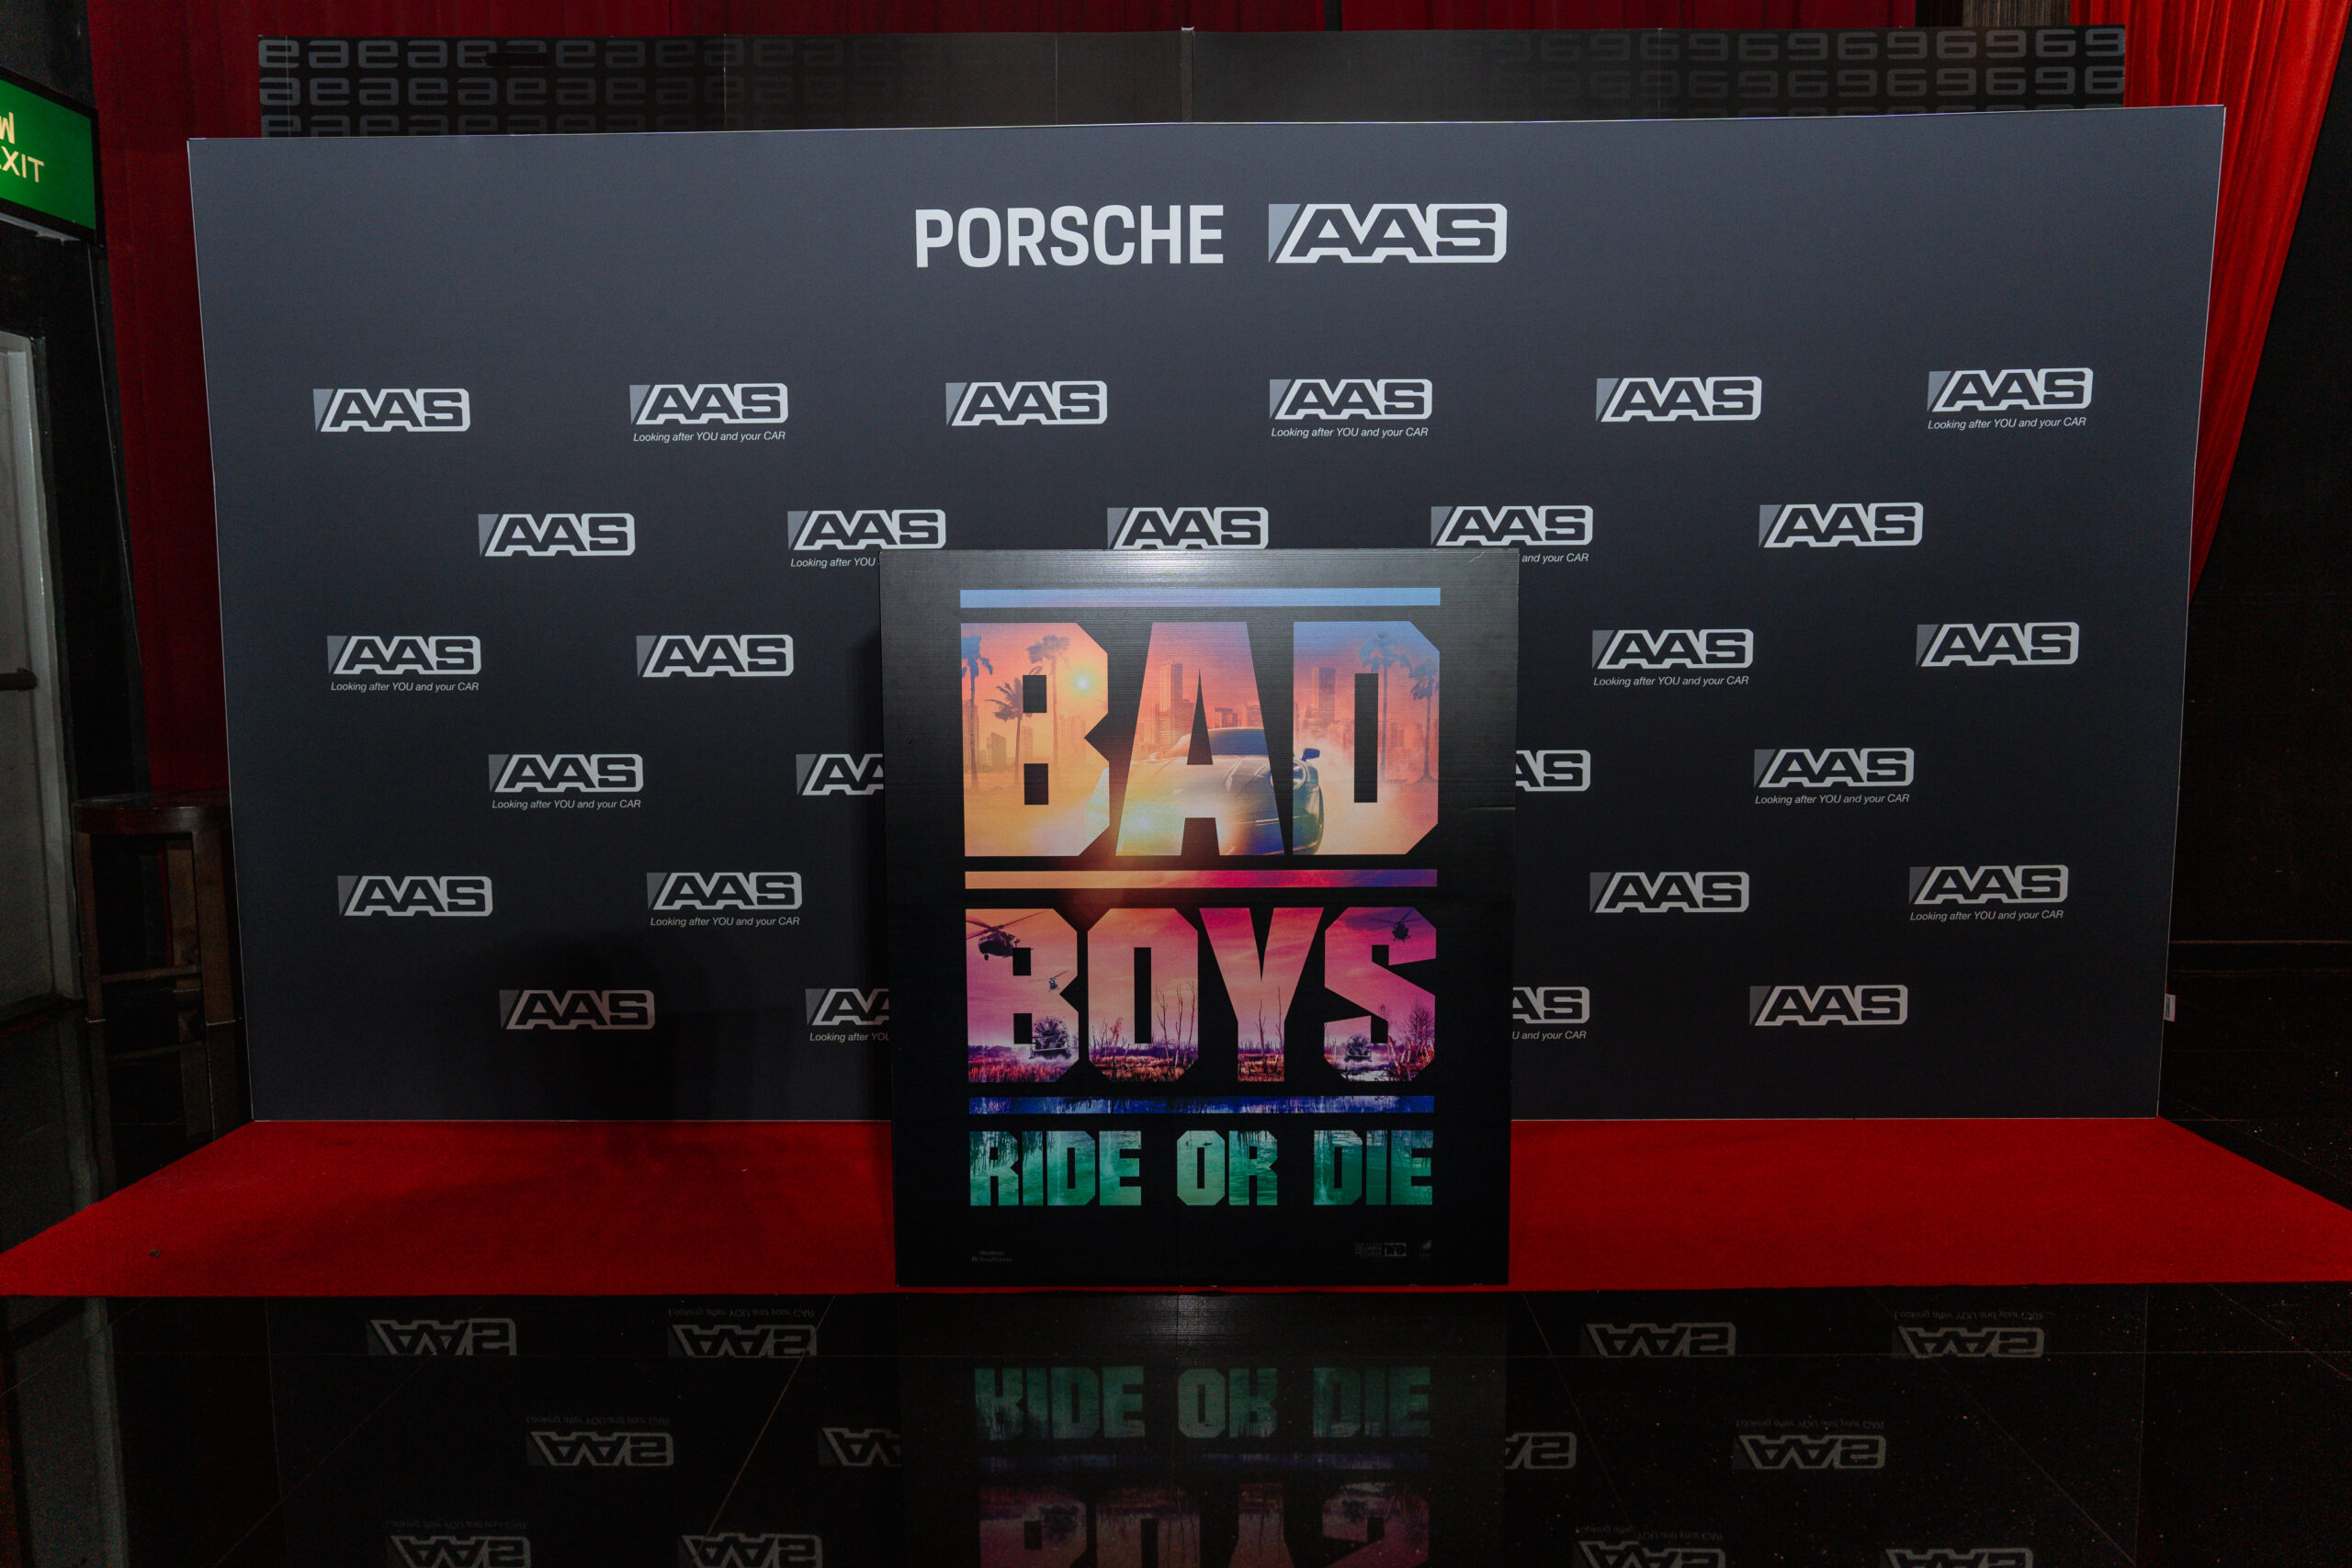 AAS-Porsche PR: เอเอเอสฯ ชวนลูกค้าร่วมสัมผัสประสบการณ์สุดมันส์ไปกับภาพยนตร์แอคชั่นคอมเมดี้ Bad Boys: Ride or Die ในบรรยากาศแบบส่วนตัวกับกิจกรรม AAS Exclusive Premiere Screening